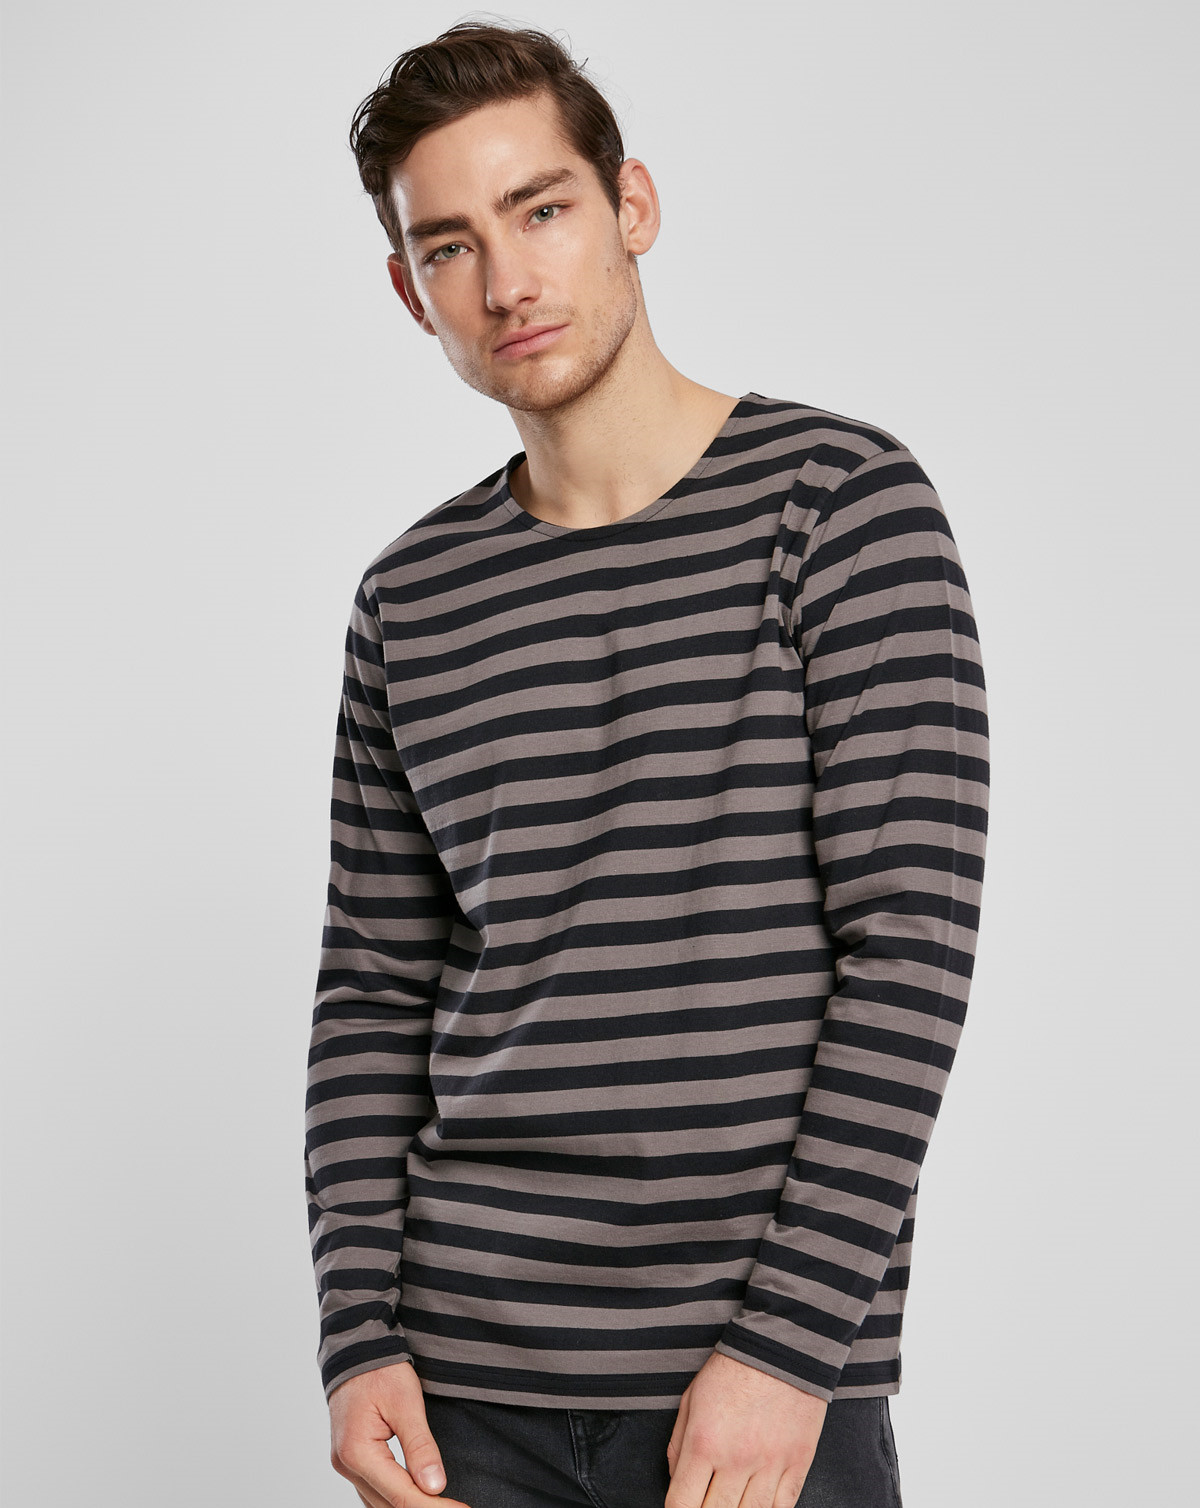 Urban Classics Regular StripeLong Sleeve T-Shirt (Asphalt / Black, 4XL)